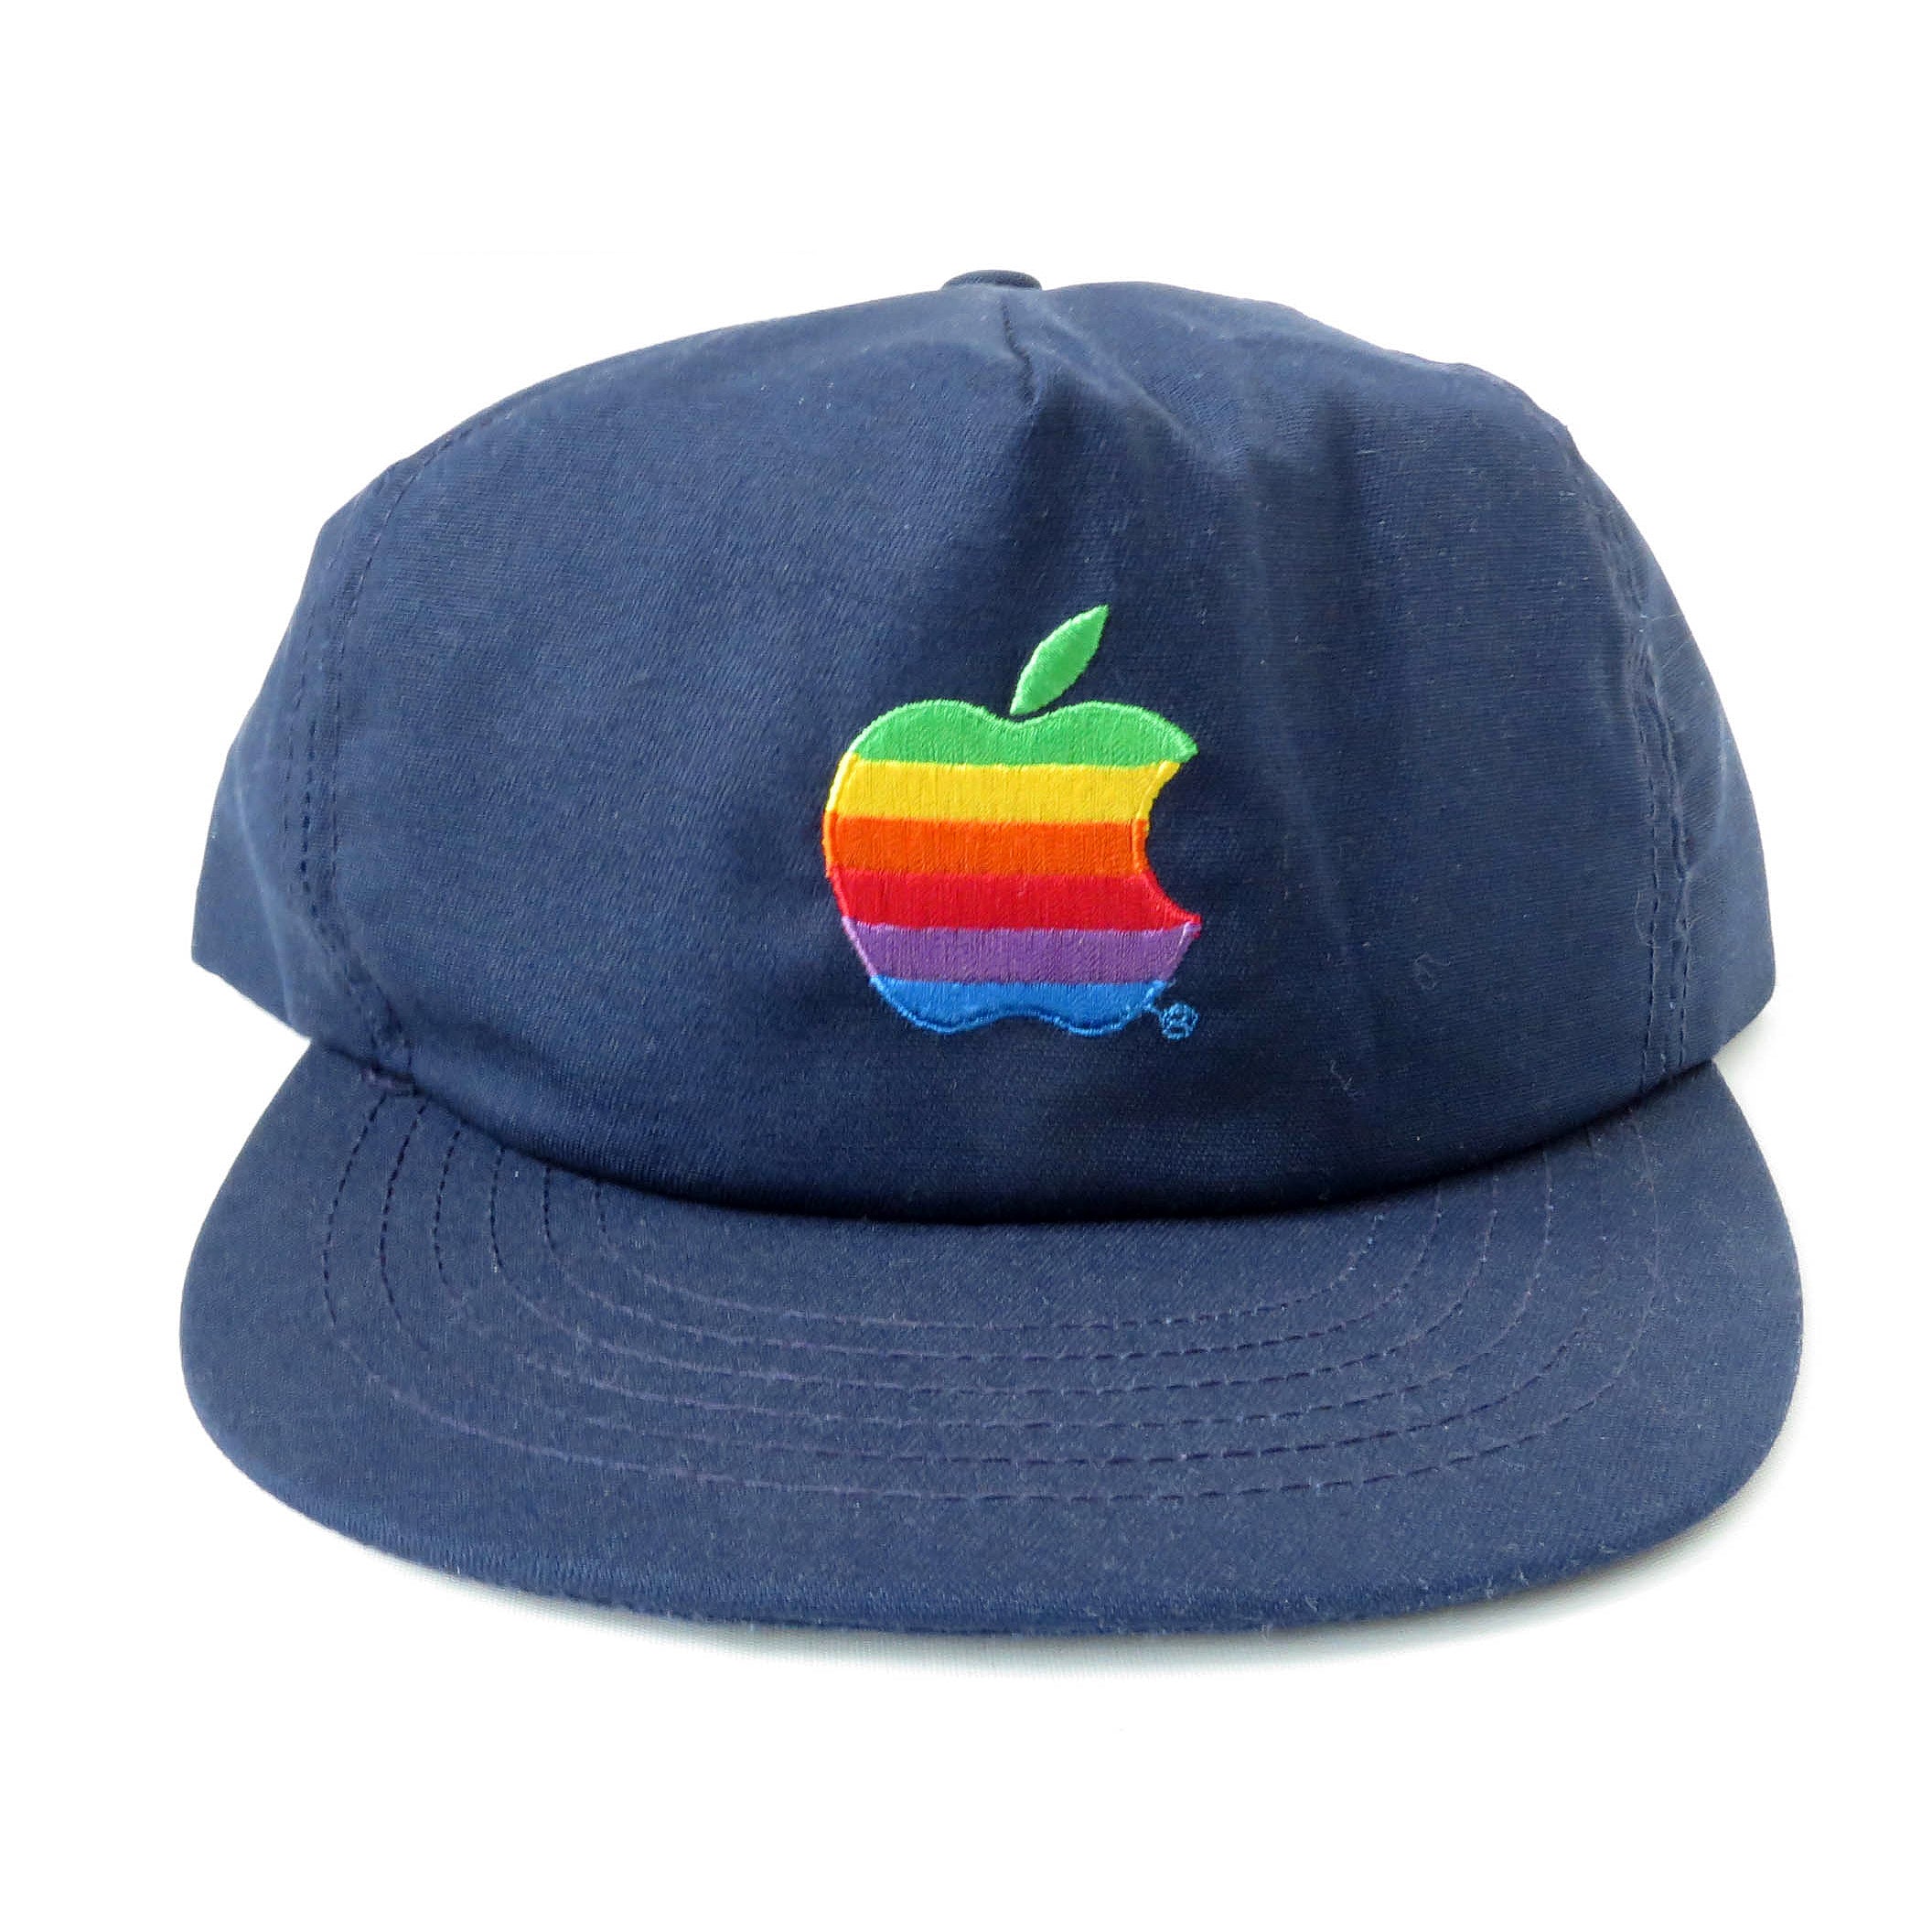 Vintage Apple Computer Snapback Hat